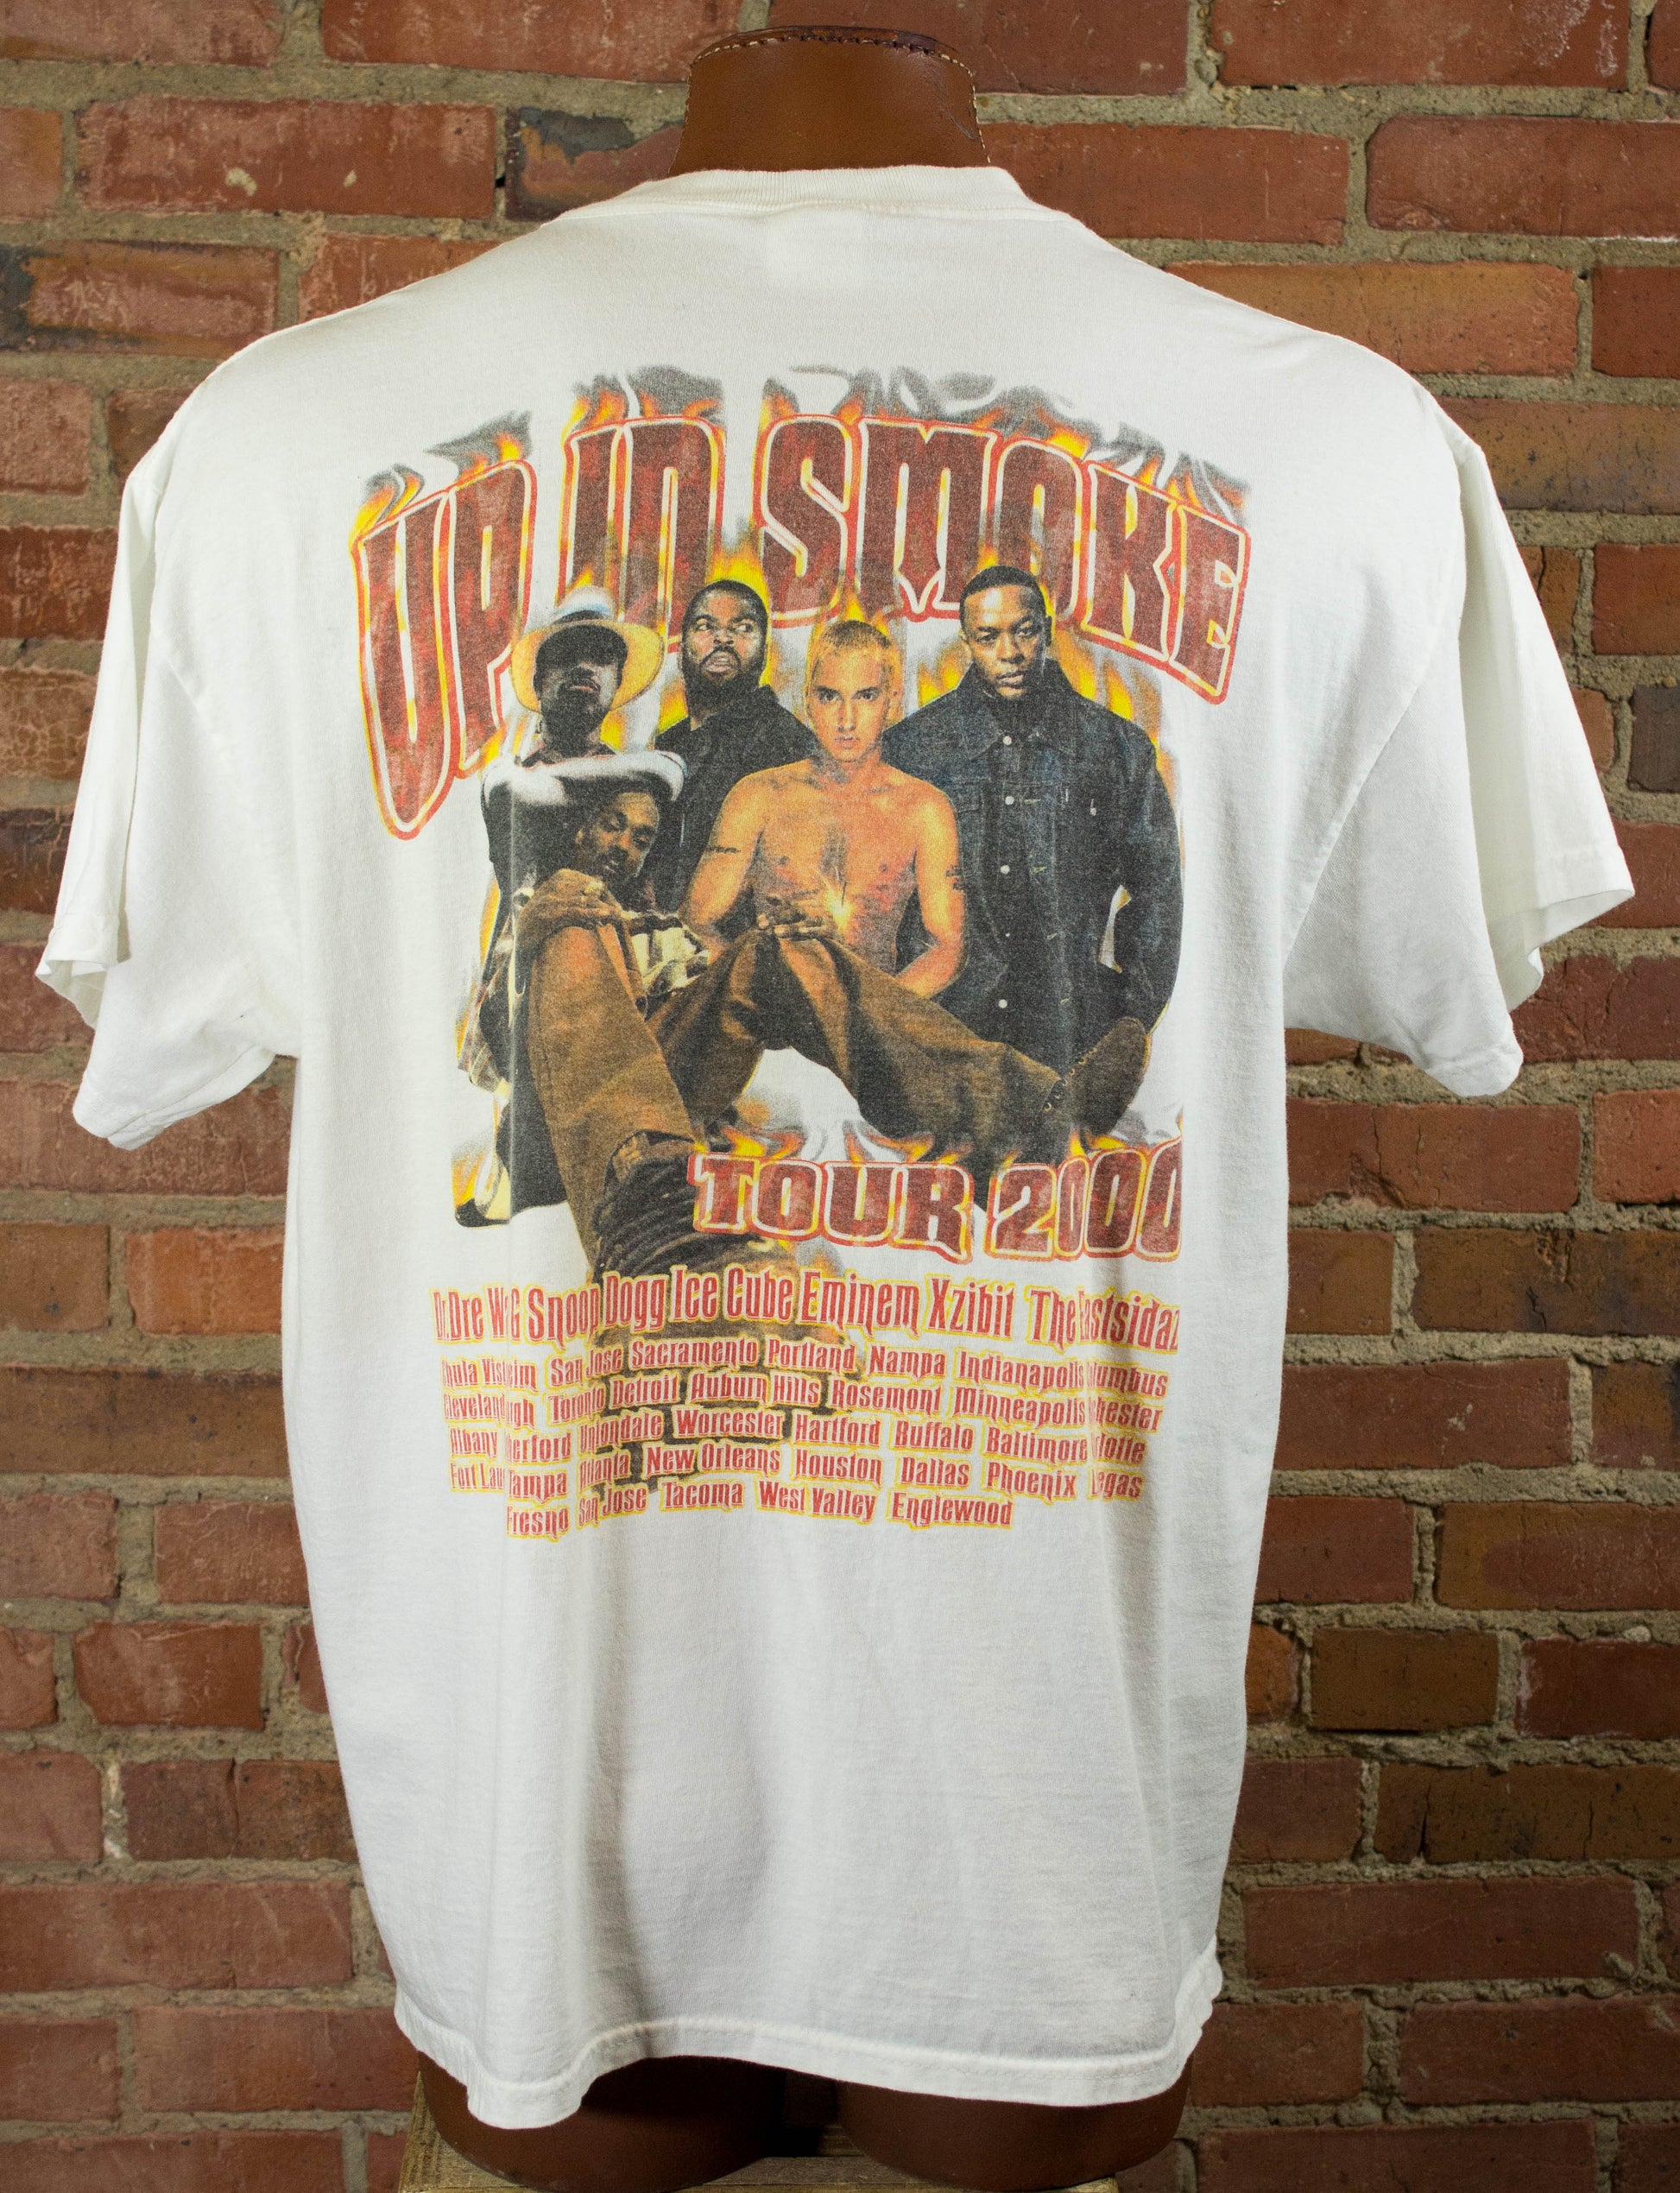 Up In Smoke Tour 2000 Eminem Dr. Dre Warren G Ice Cube Snoop Dogg Xzibit The Eastsidaz White Rap Tee Concert T Shirt Unisex XL